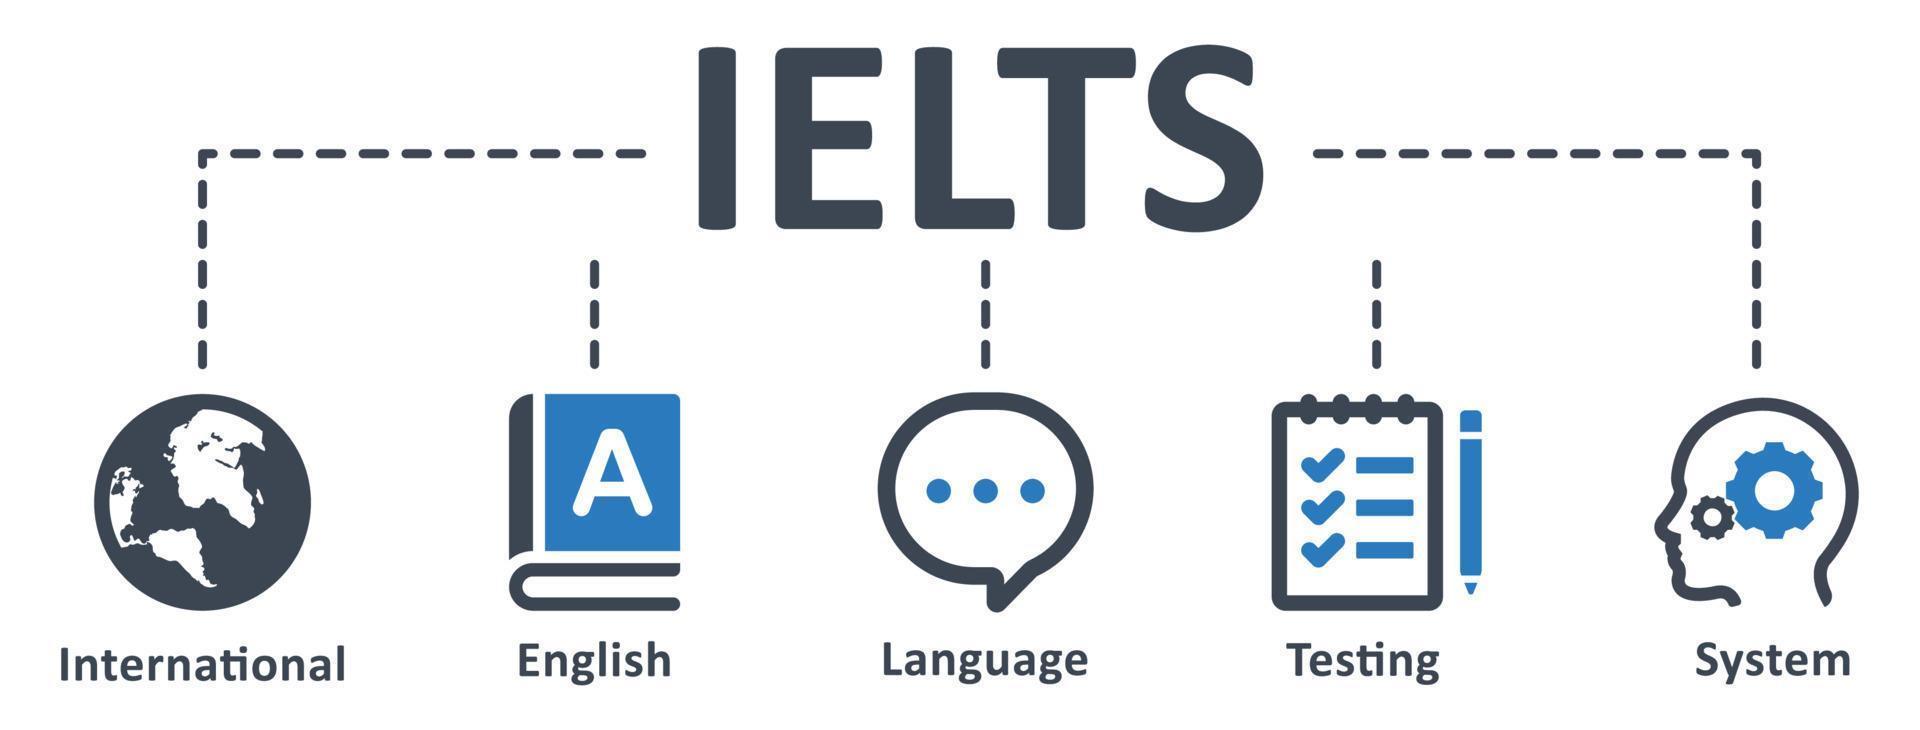 IELTS icon - vector illustration . ielts, english, international, language, globe, communication, evaluation, system, speaking, infographic, template, concept, banner, pictogram, icon set, icons .